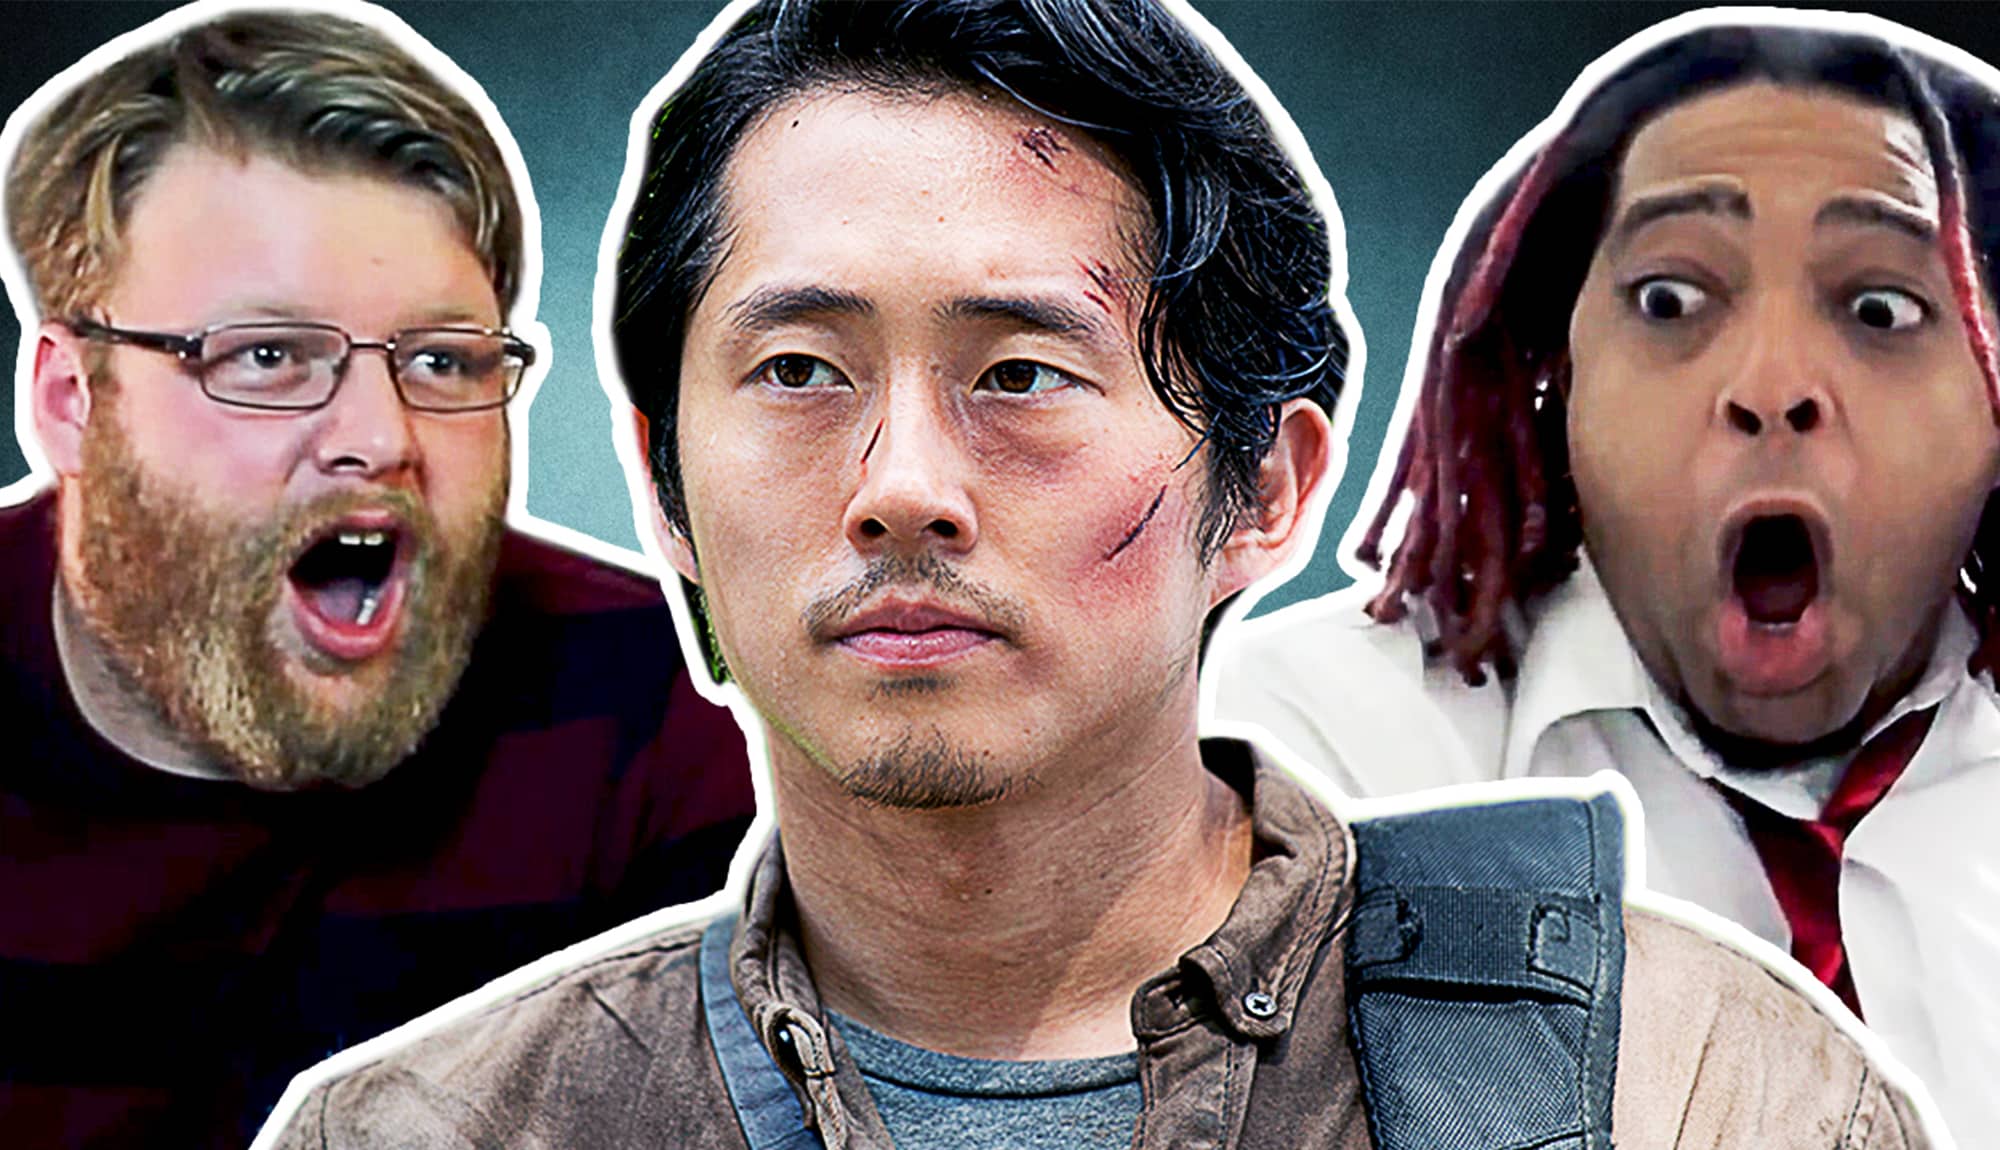 Fans React to The Walking Dead Season 6 Episode 3: “Thank You”